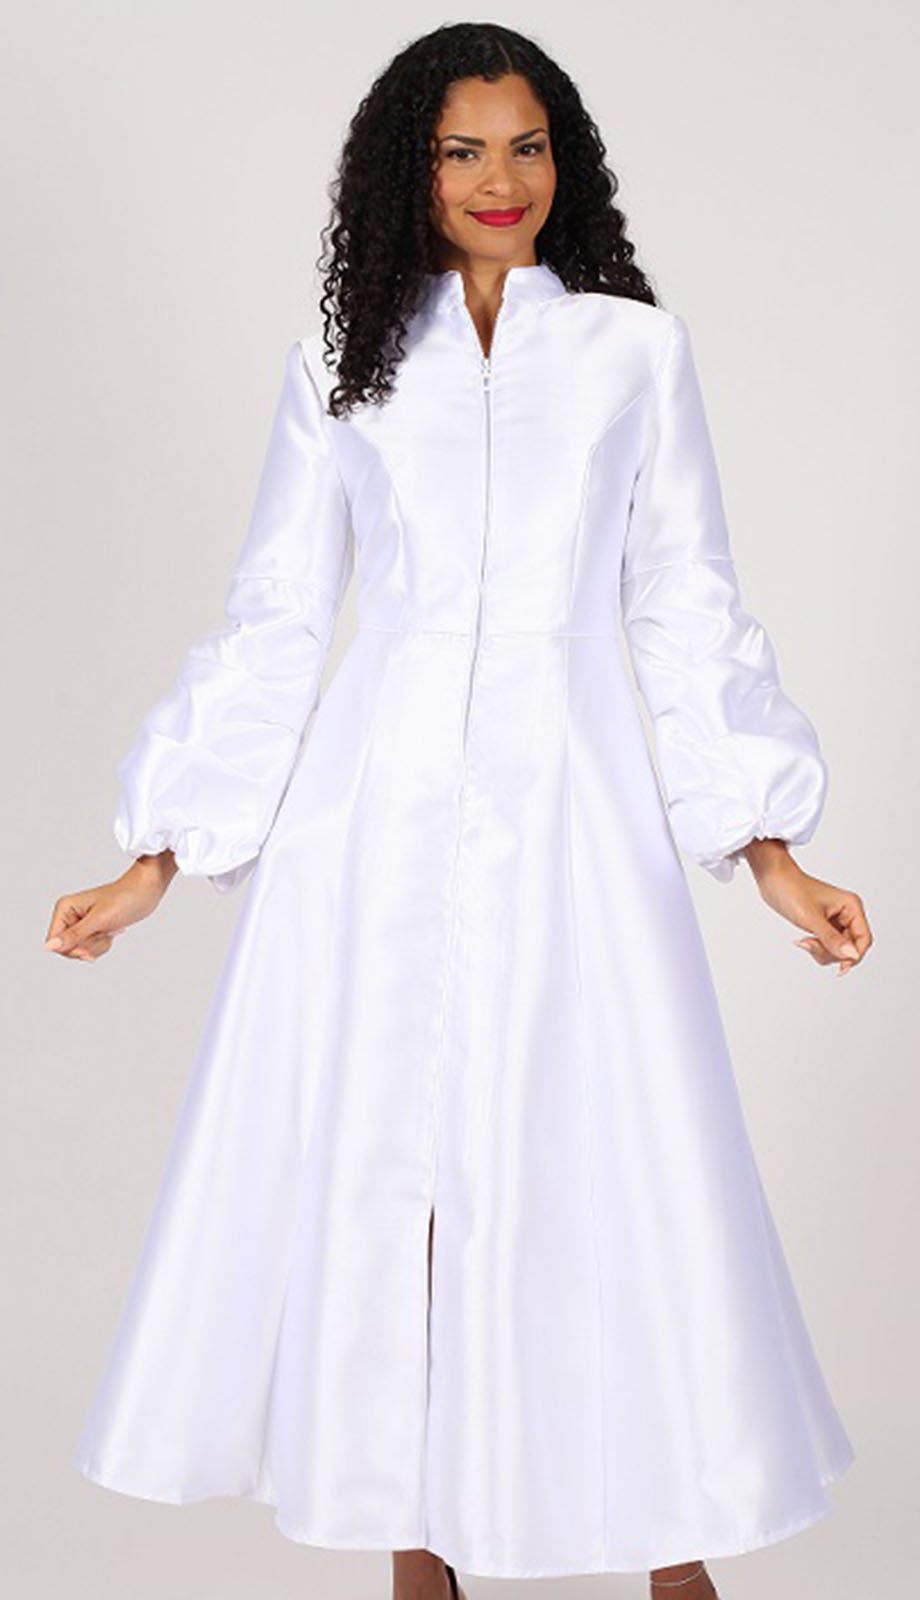 Diana Church Robe 8601-White - Church Suits For Less